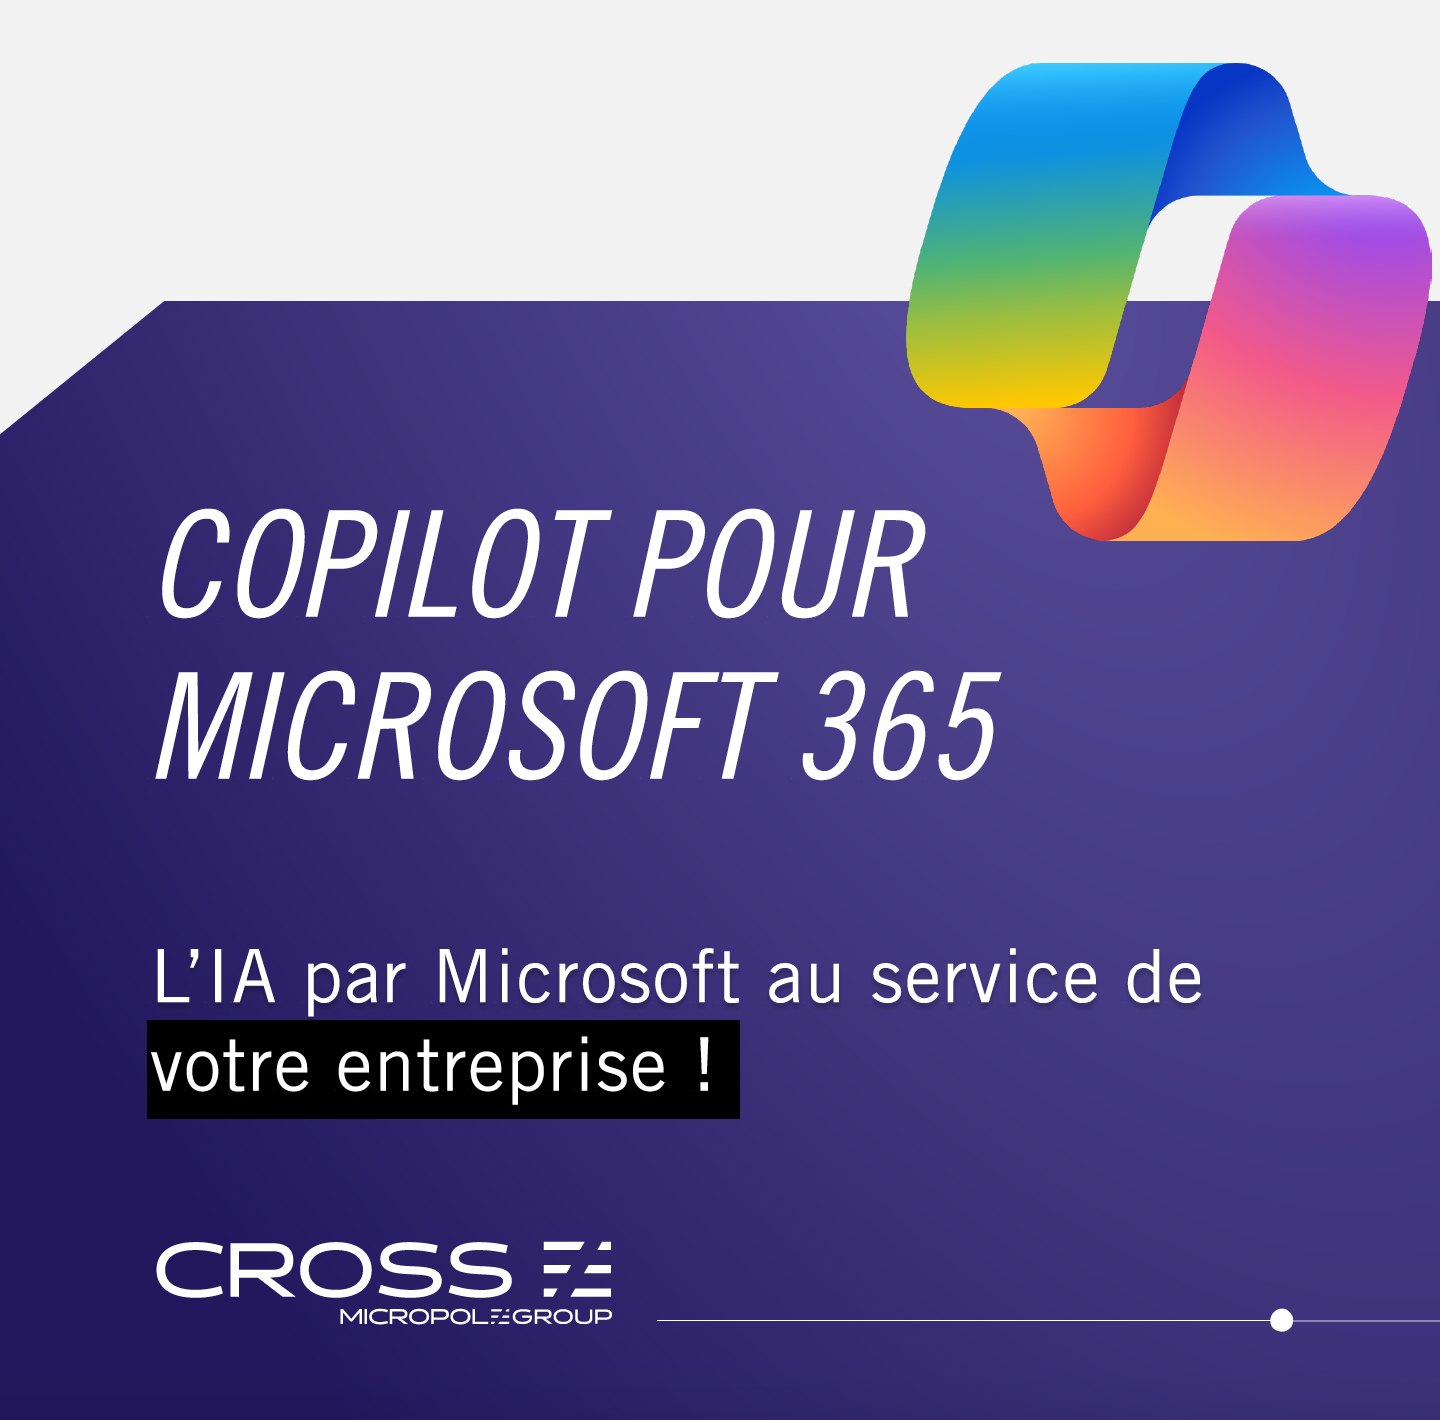 Adoptez Copilot pour Microsoft 365 !